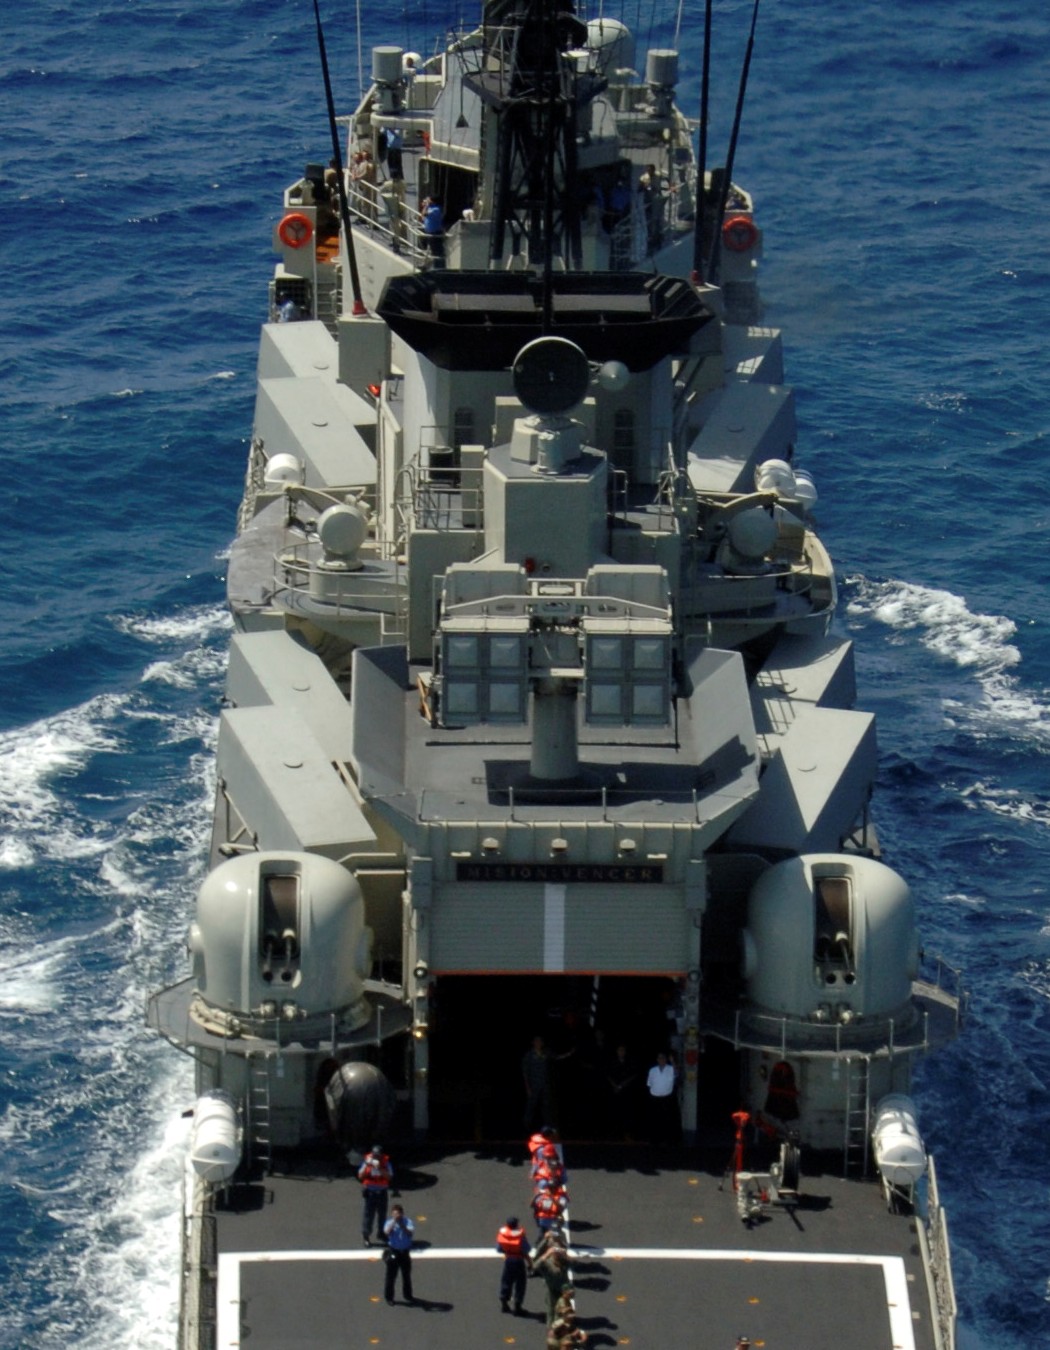 otomat teseo ssm missile lupo class frigate peruvian navy